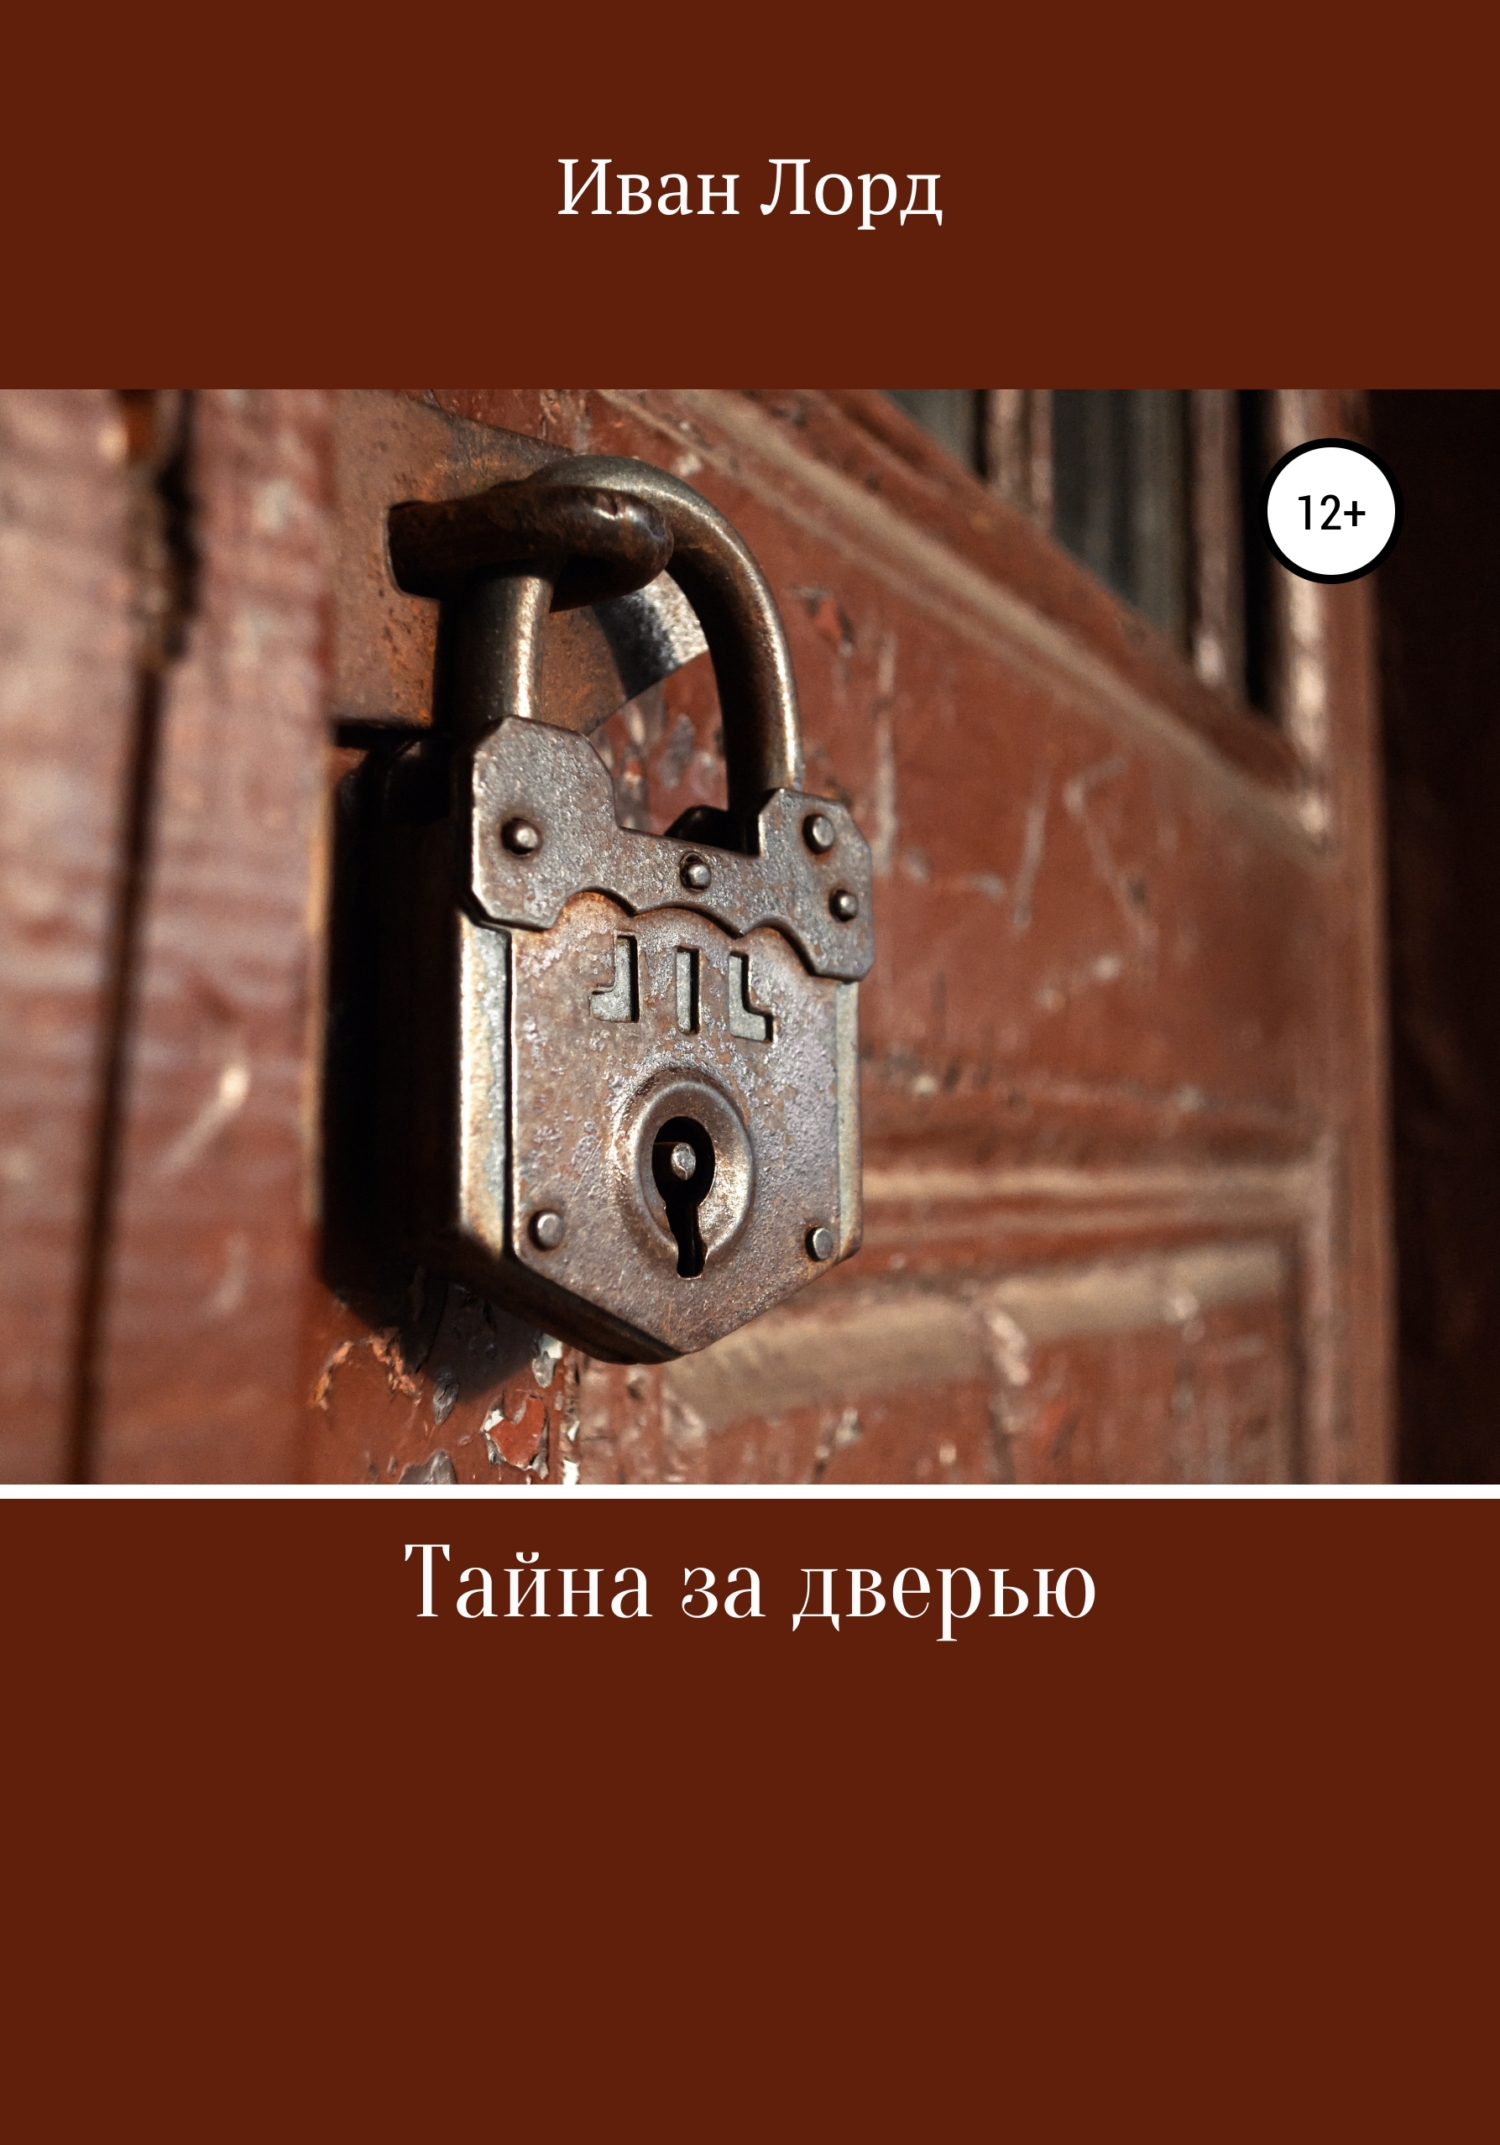 Тайна за дверью (fb2)